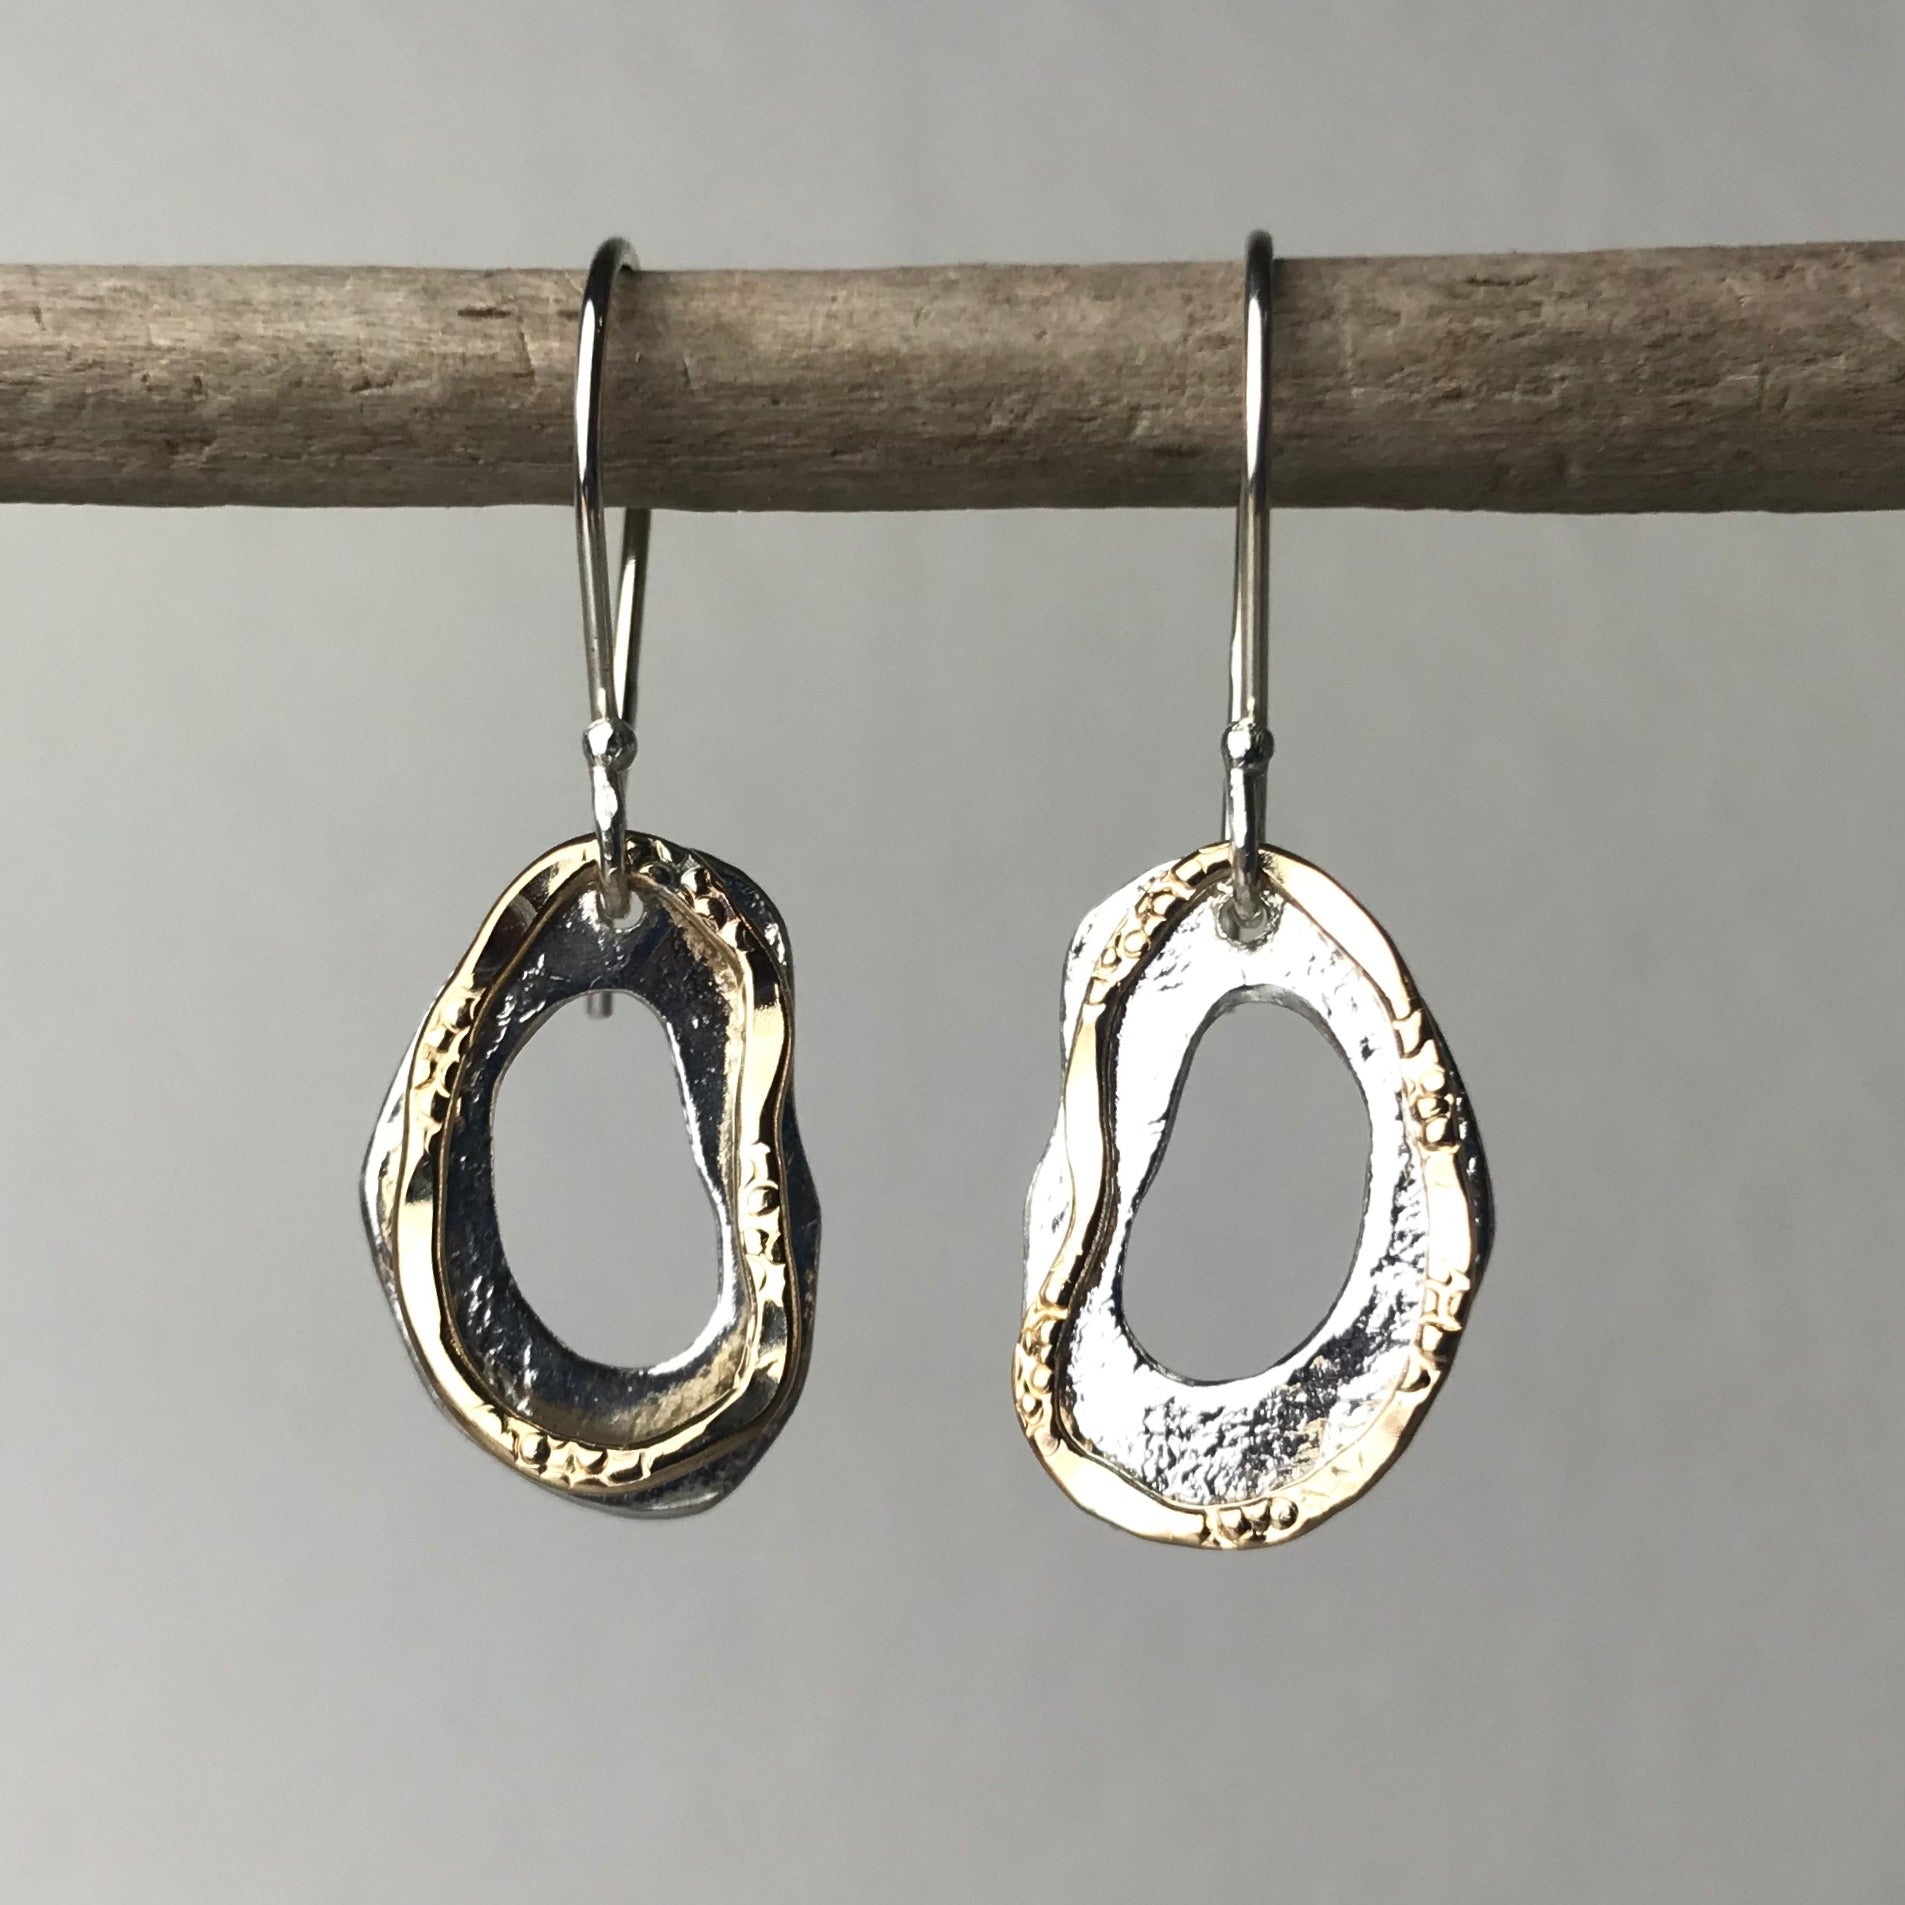 Organic Ovals Earrings - The Nancy Smillie Shop - Art, Jewellery & Designer Gifts Glasgow